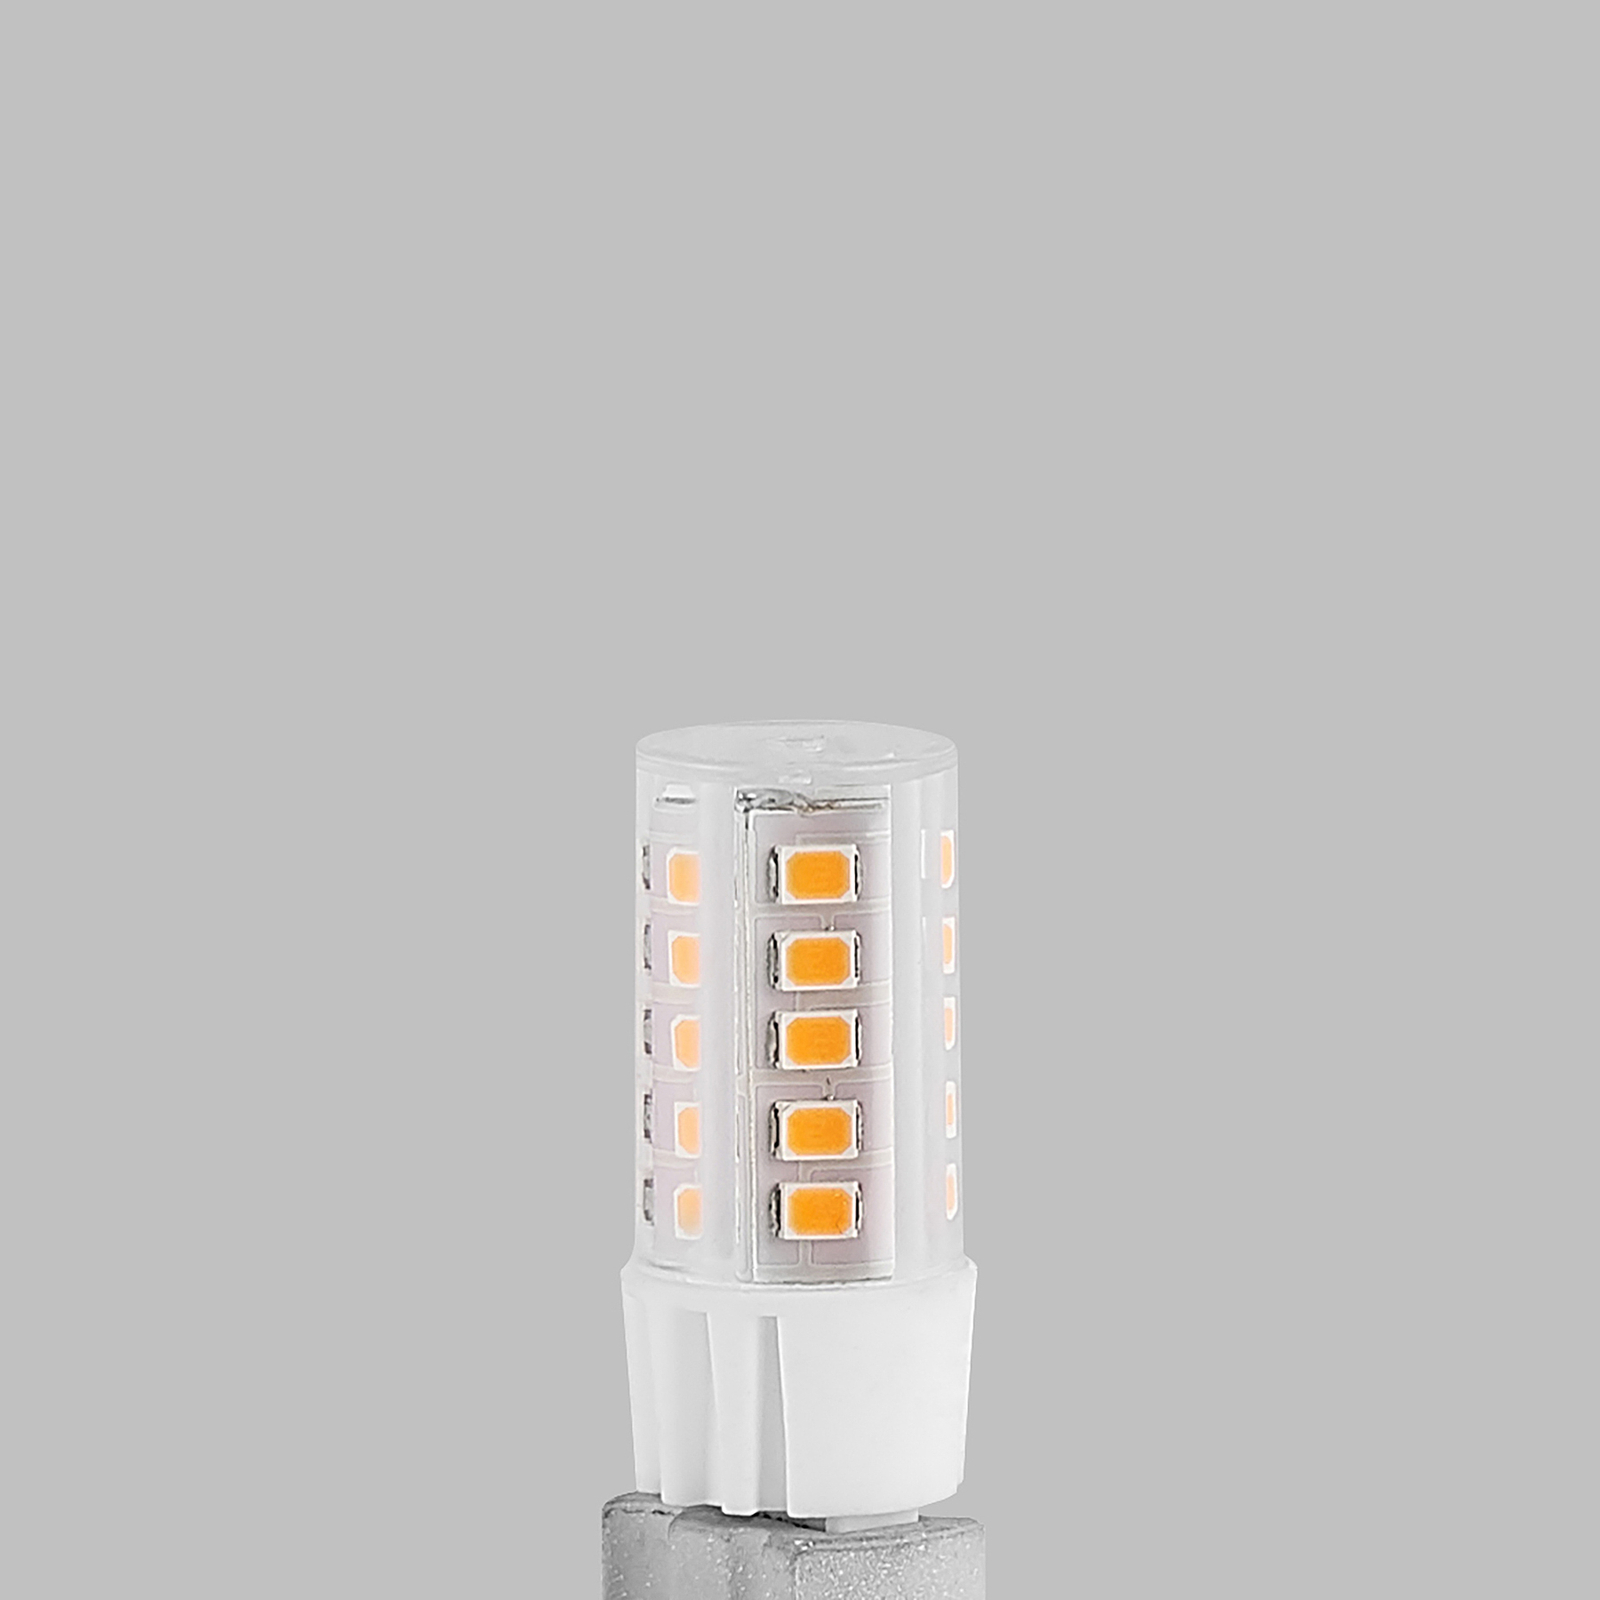 Arcchio LED stiftlamp G9 3,5W 827 2 per set